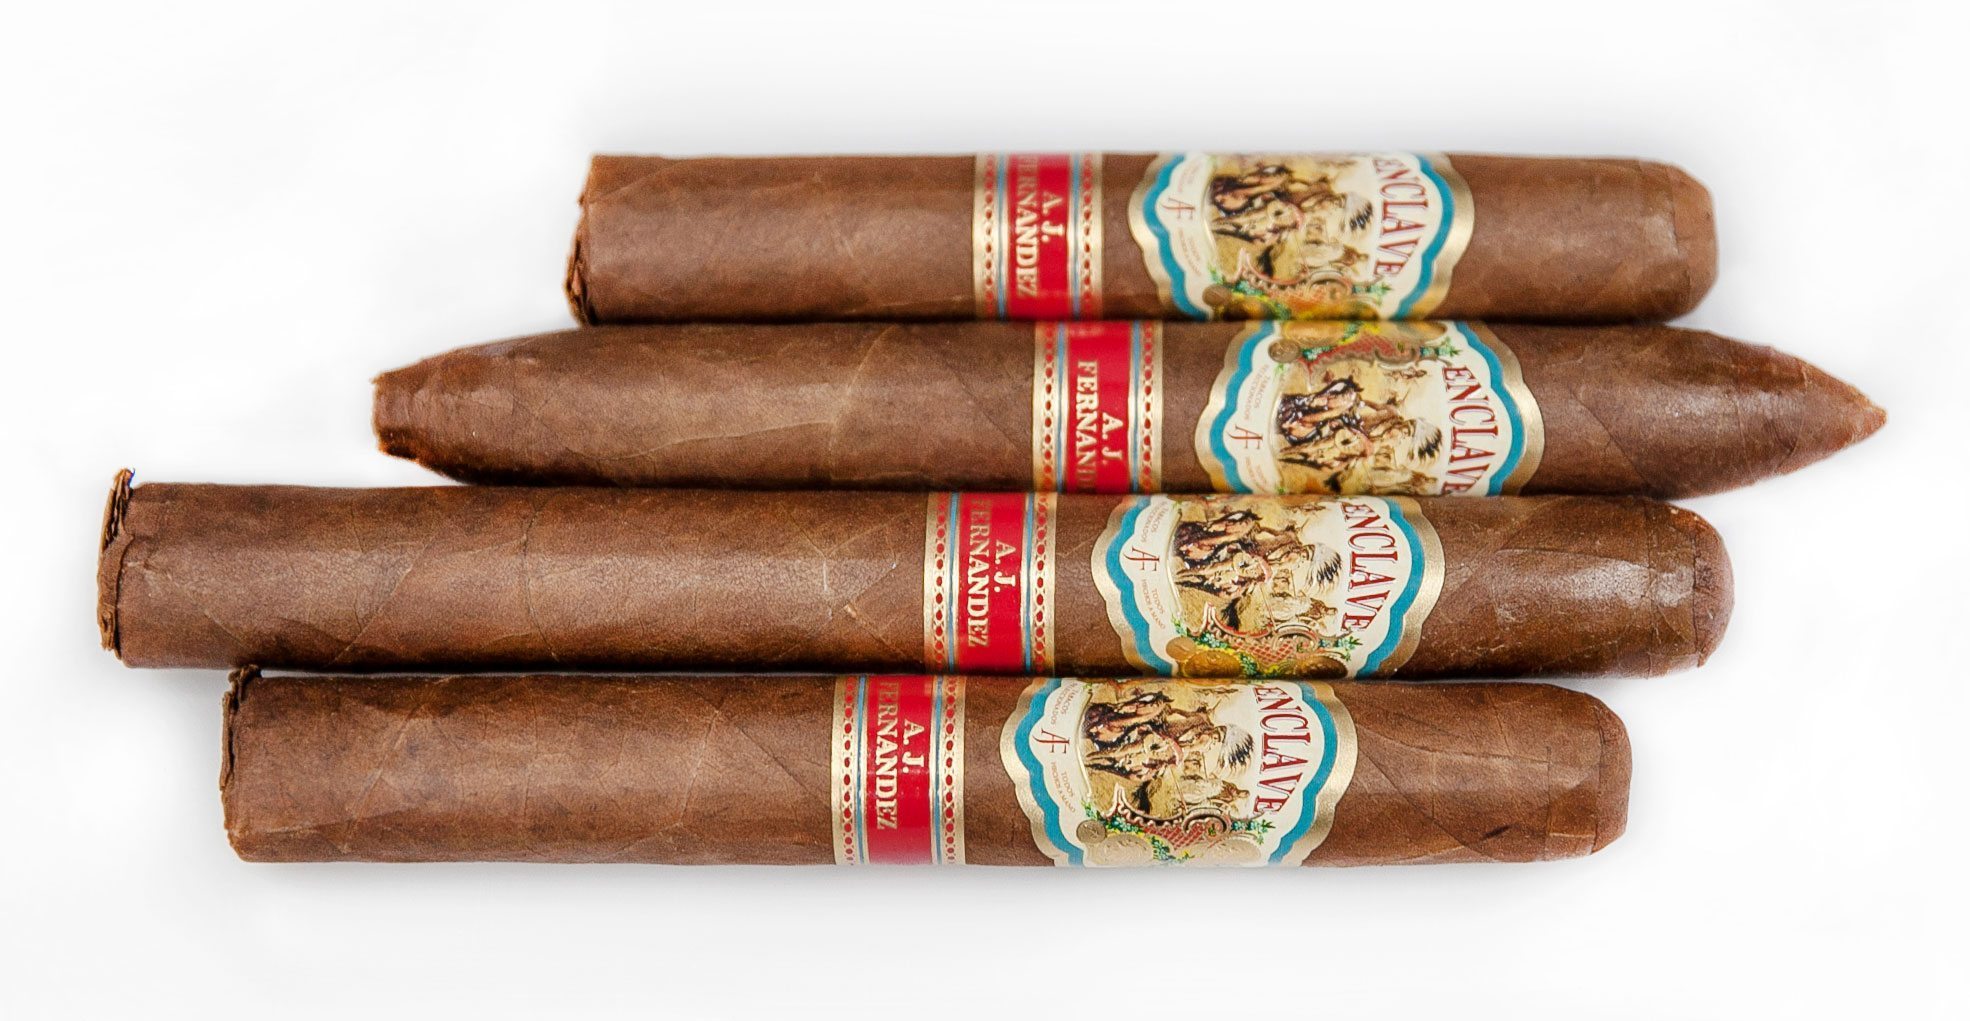 Cigar News: A.J. Fernandez to Introduce "Enclave" at IPCPR